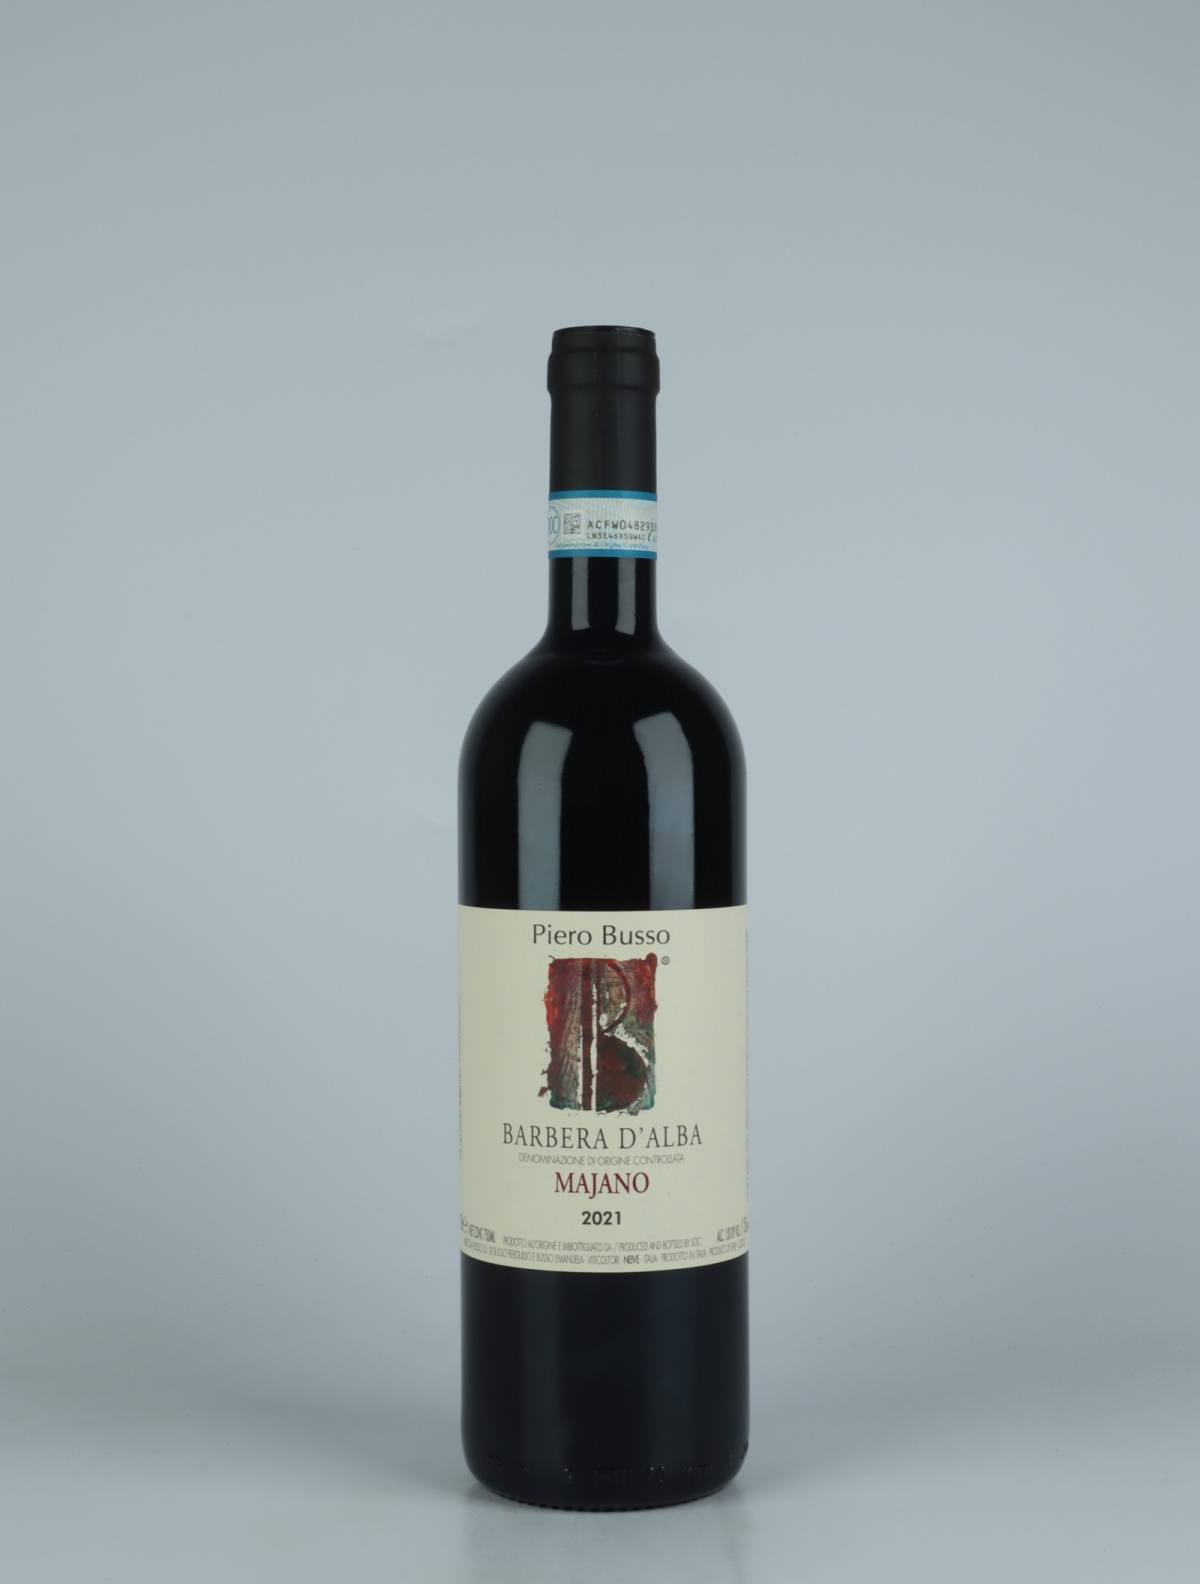 En flaske 2021 Barbera d'Alba - Majano Rødvin fra Piero Busso, Piemonte i Italien